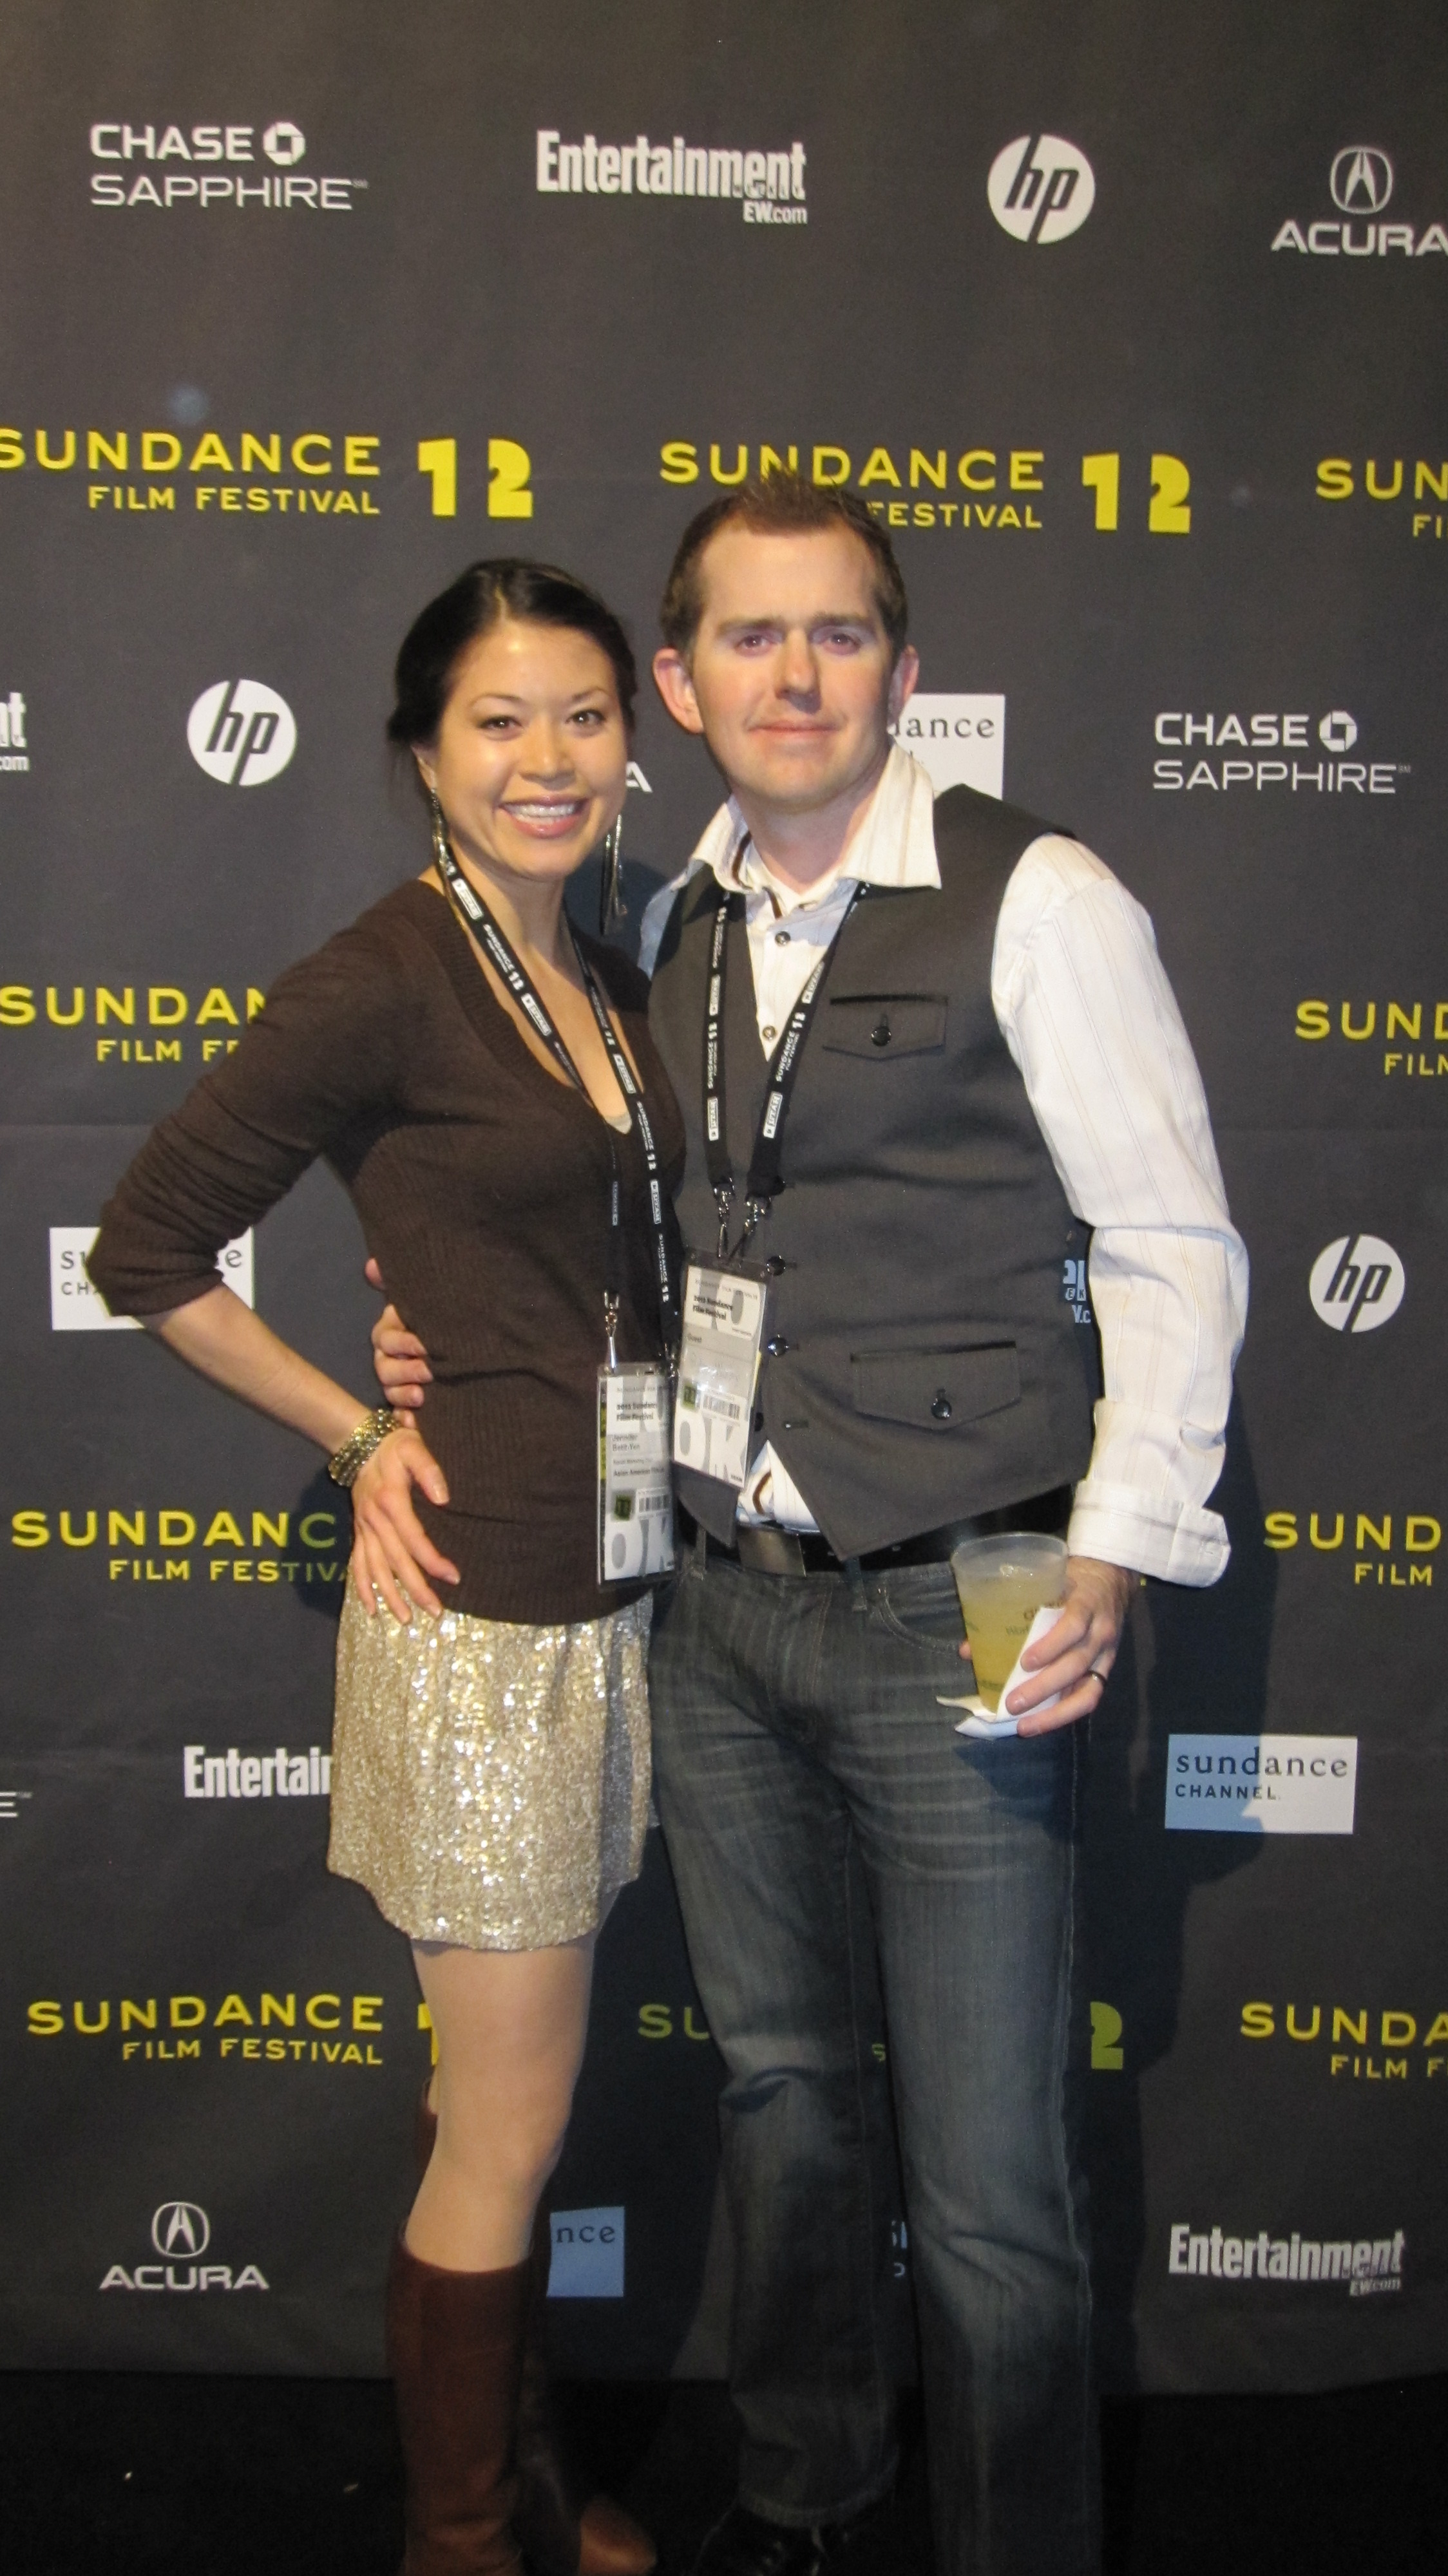 Sundance Film Festival Closing Night Awards Party